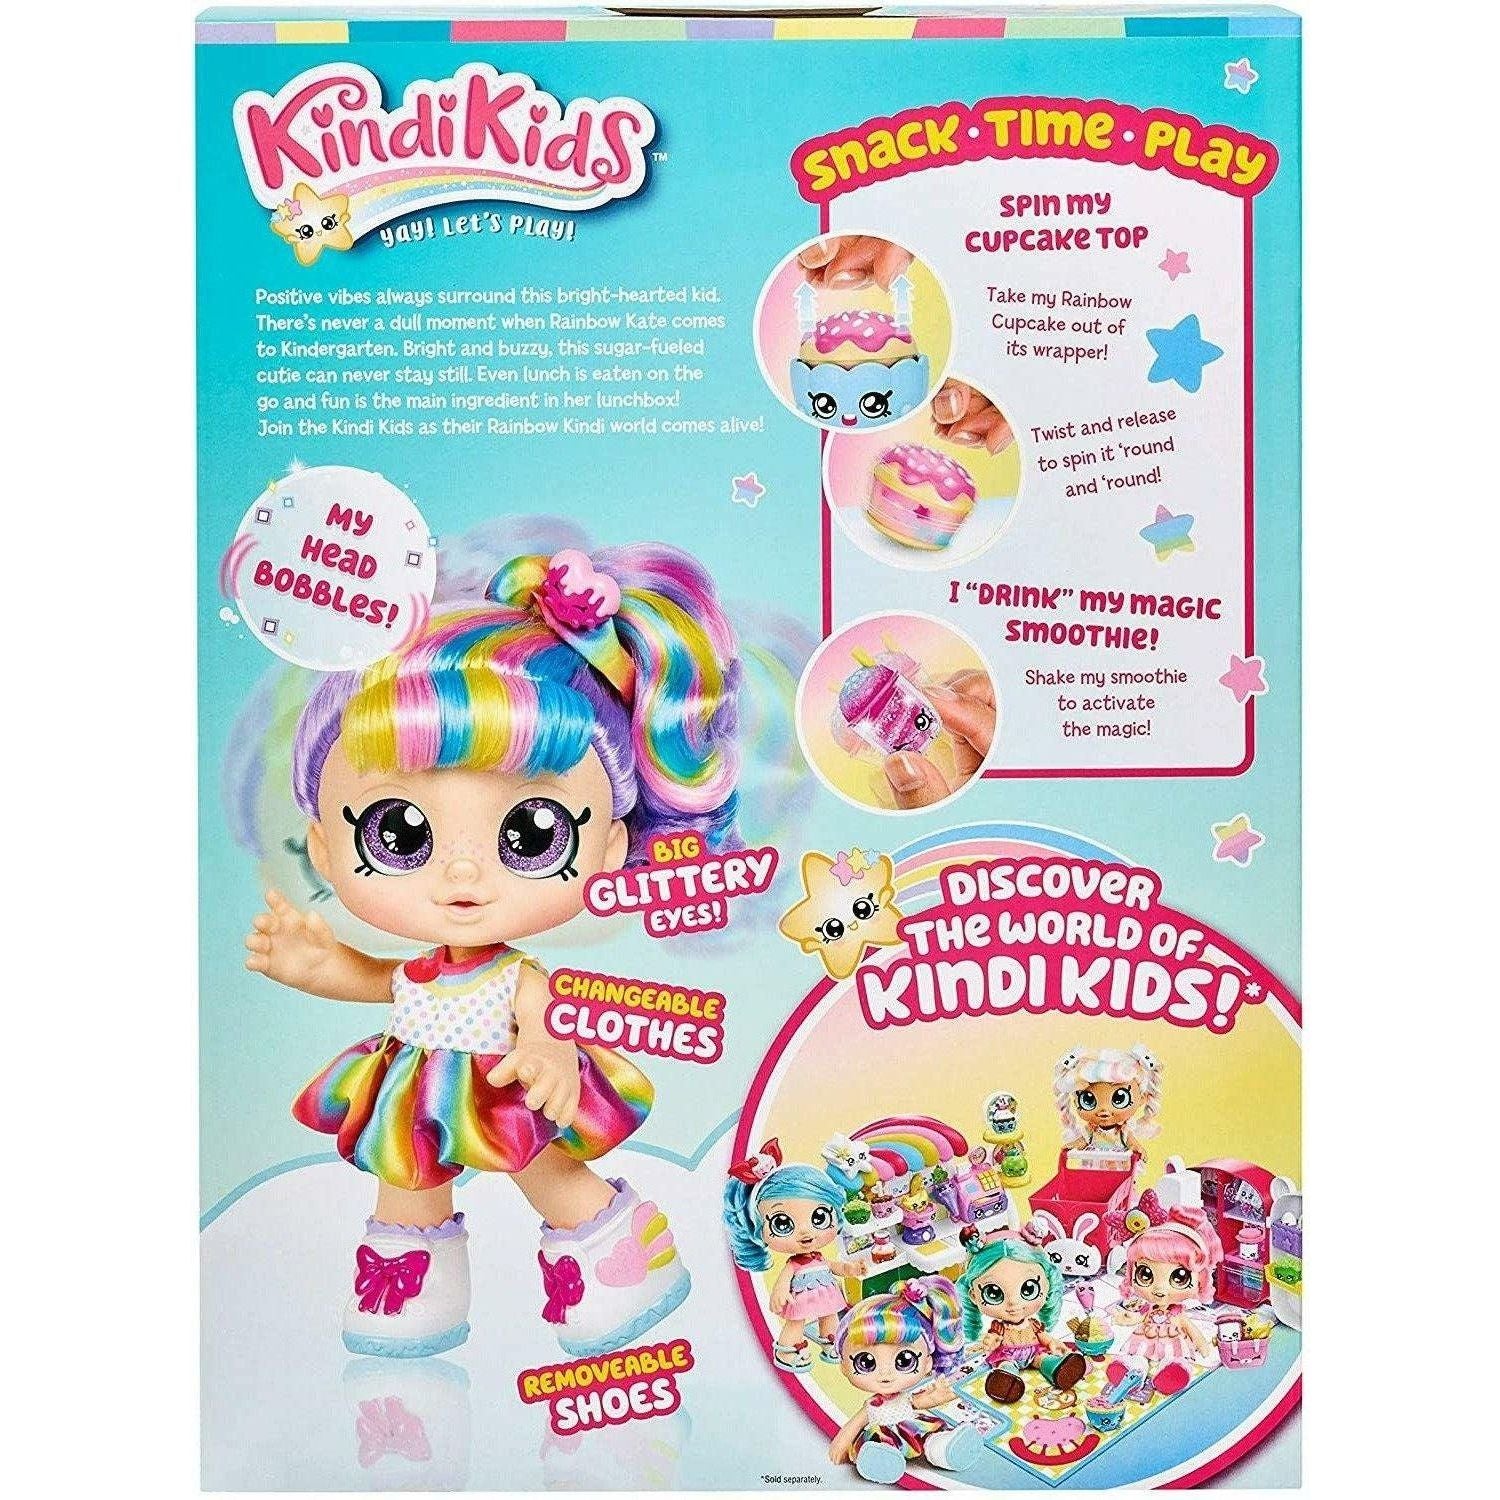 Kindi Kids Snack Time Friends - Pre-School Play Doll, Rainbow Kate Doll - BumbleToys - 5-7 Years, Fashion Dolls & Accessories, Girls, Kindi Kids